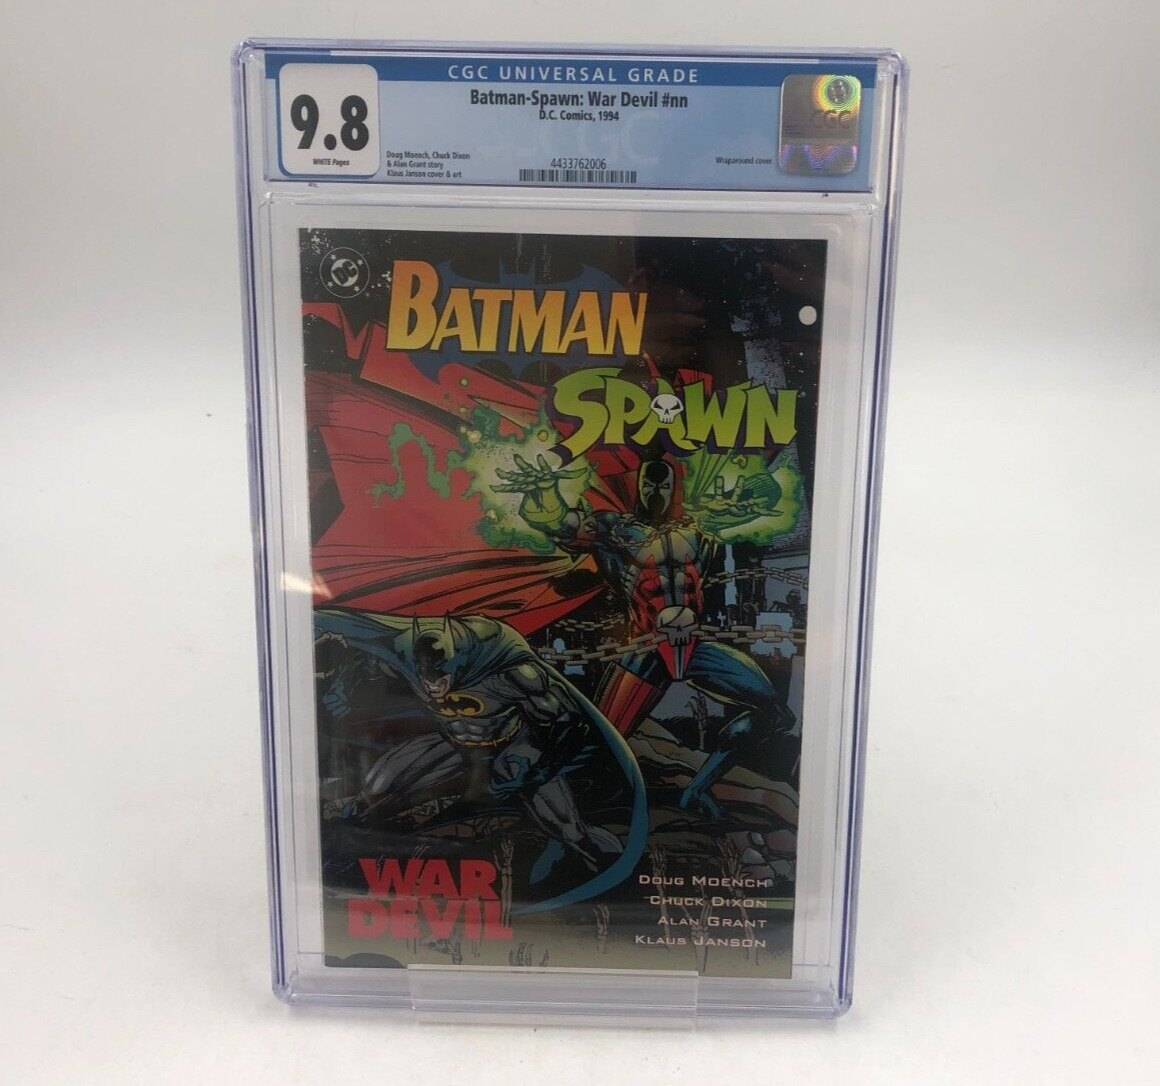 Batman Spawn War Devil #1 CGC 9.8 McFarlane DC Comics 1994